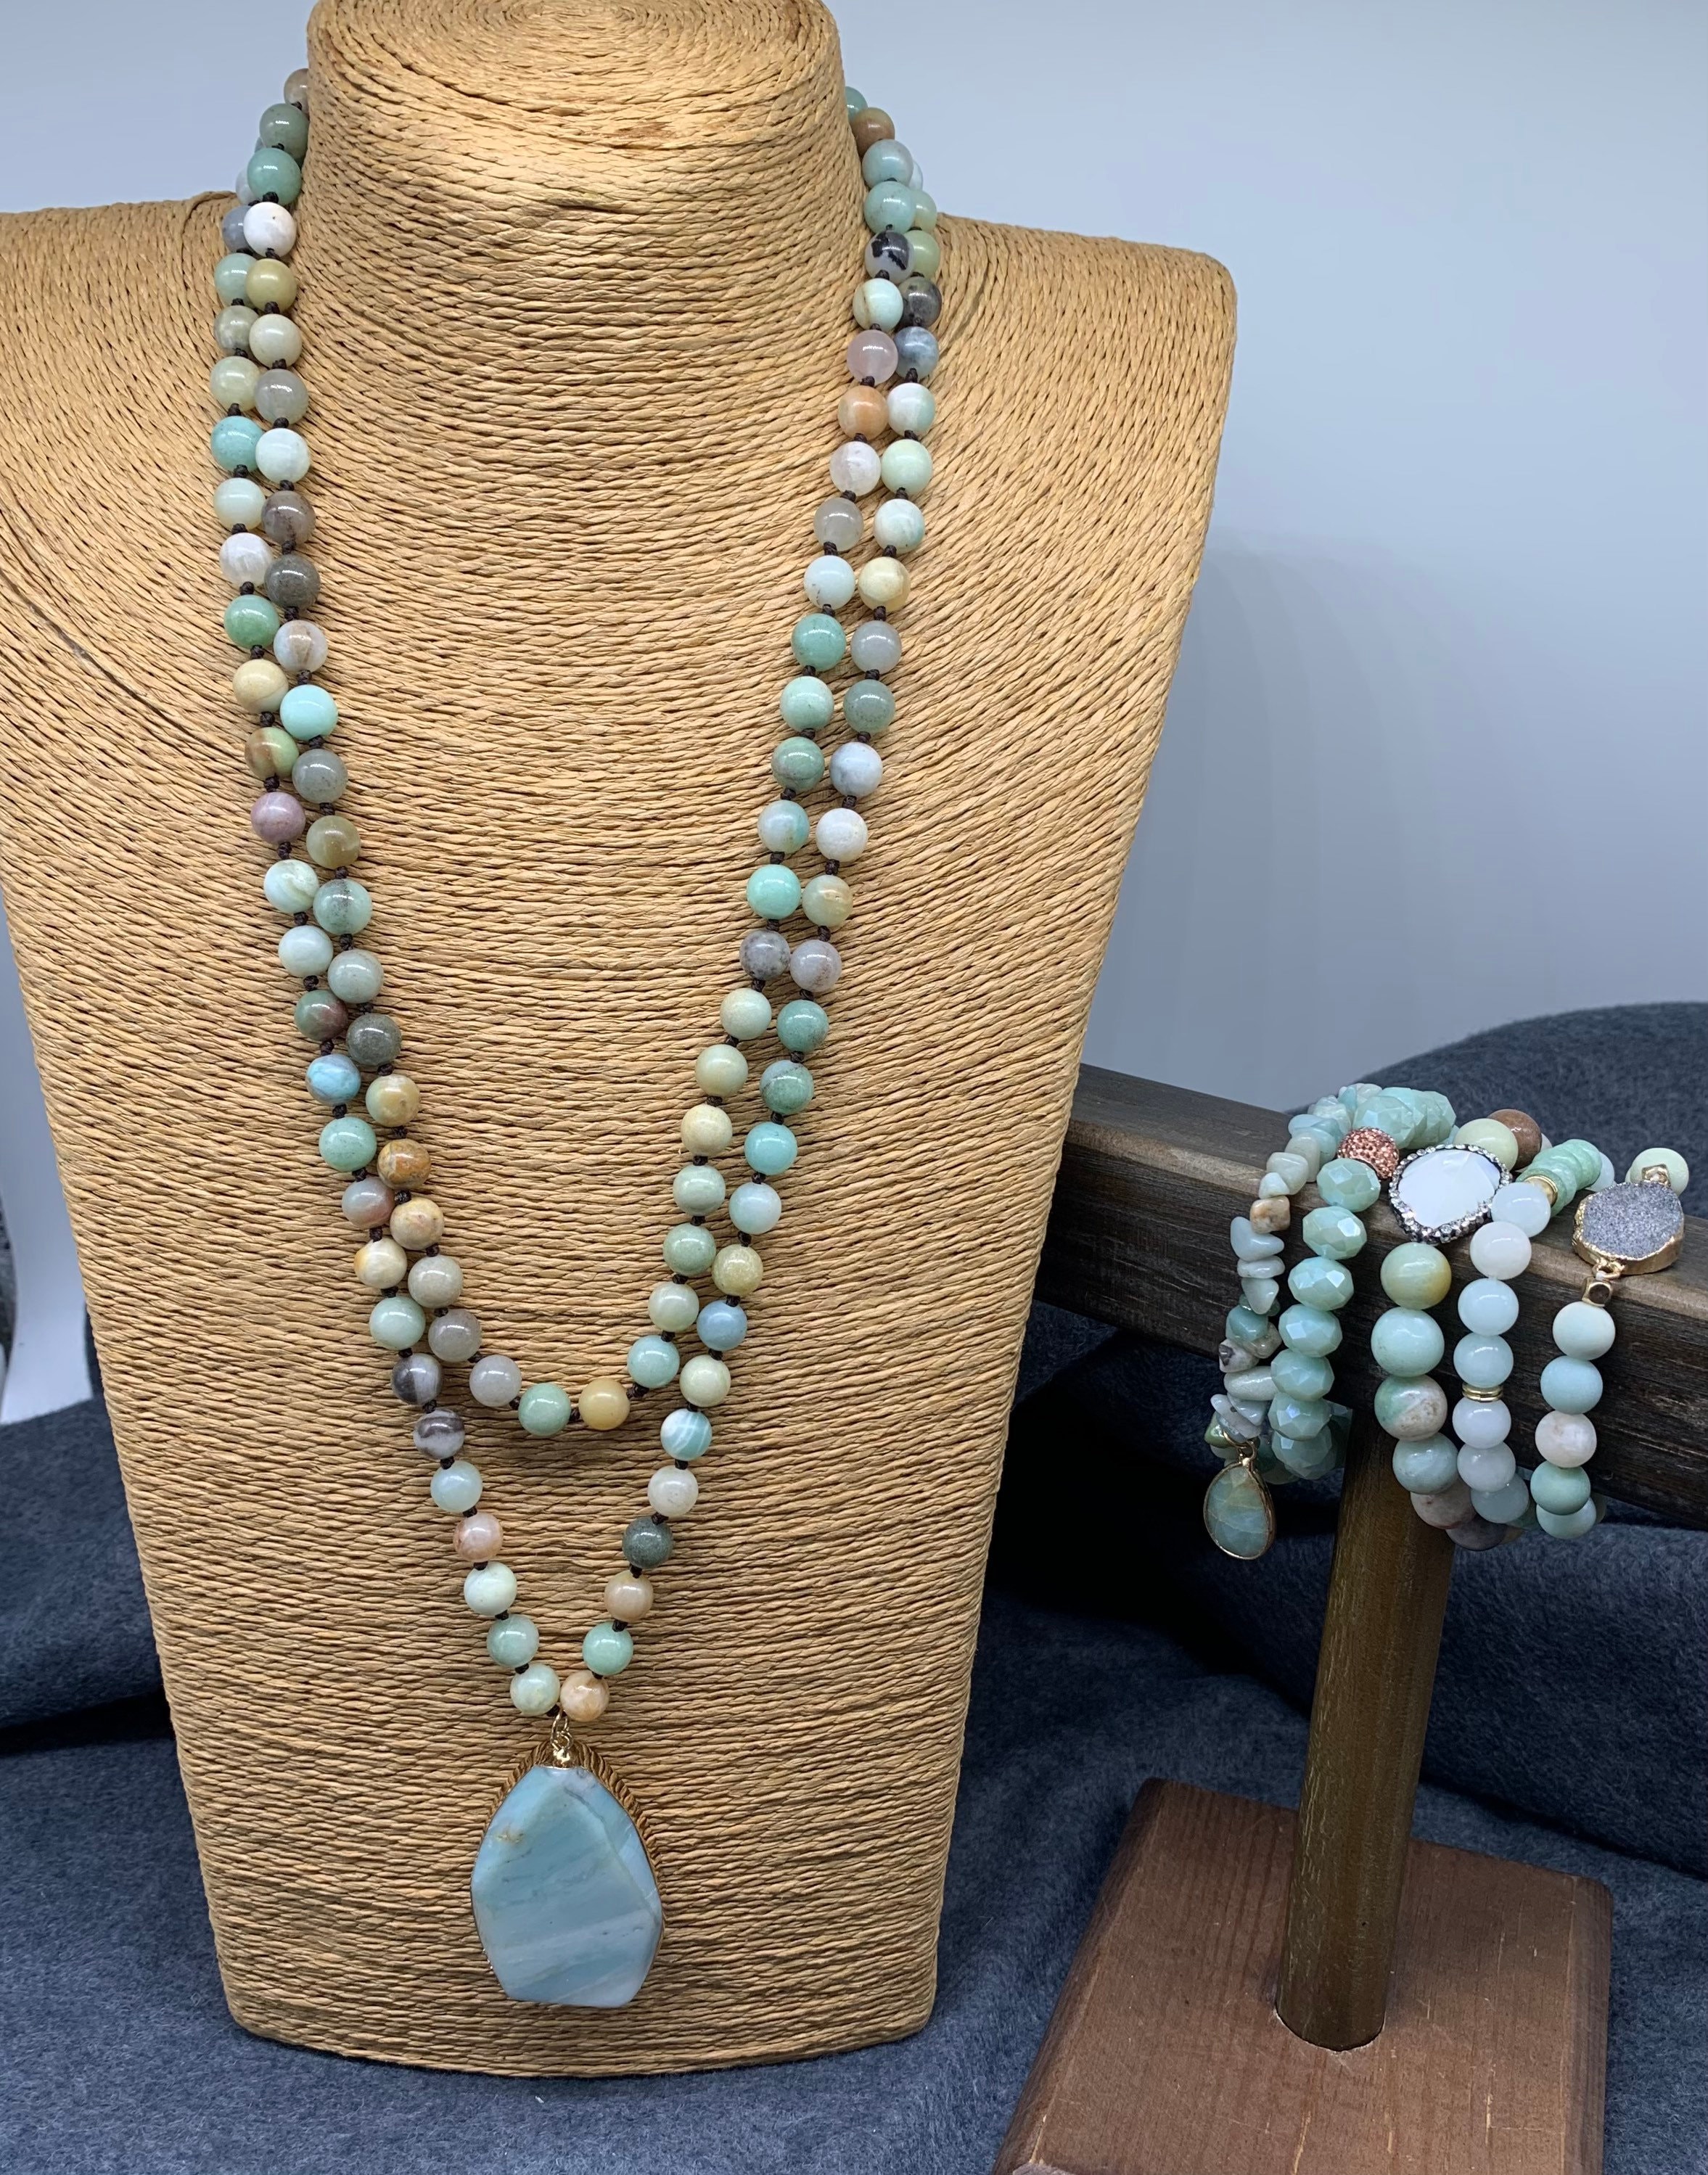 6mm Glass Beads for Bracelet, (15 Colors & 1350 Total) Porcelain Crystal Rondelle Faceted Beads Strand, DIY Handwork Beading, Spacer Bead for